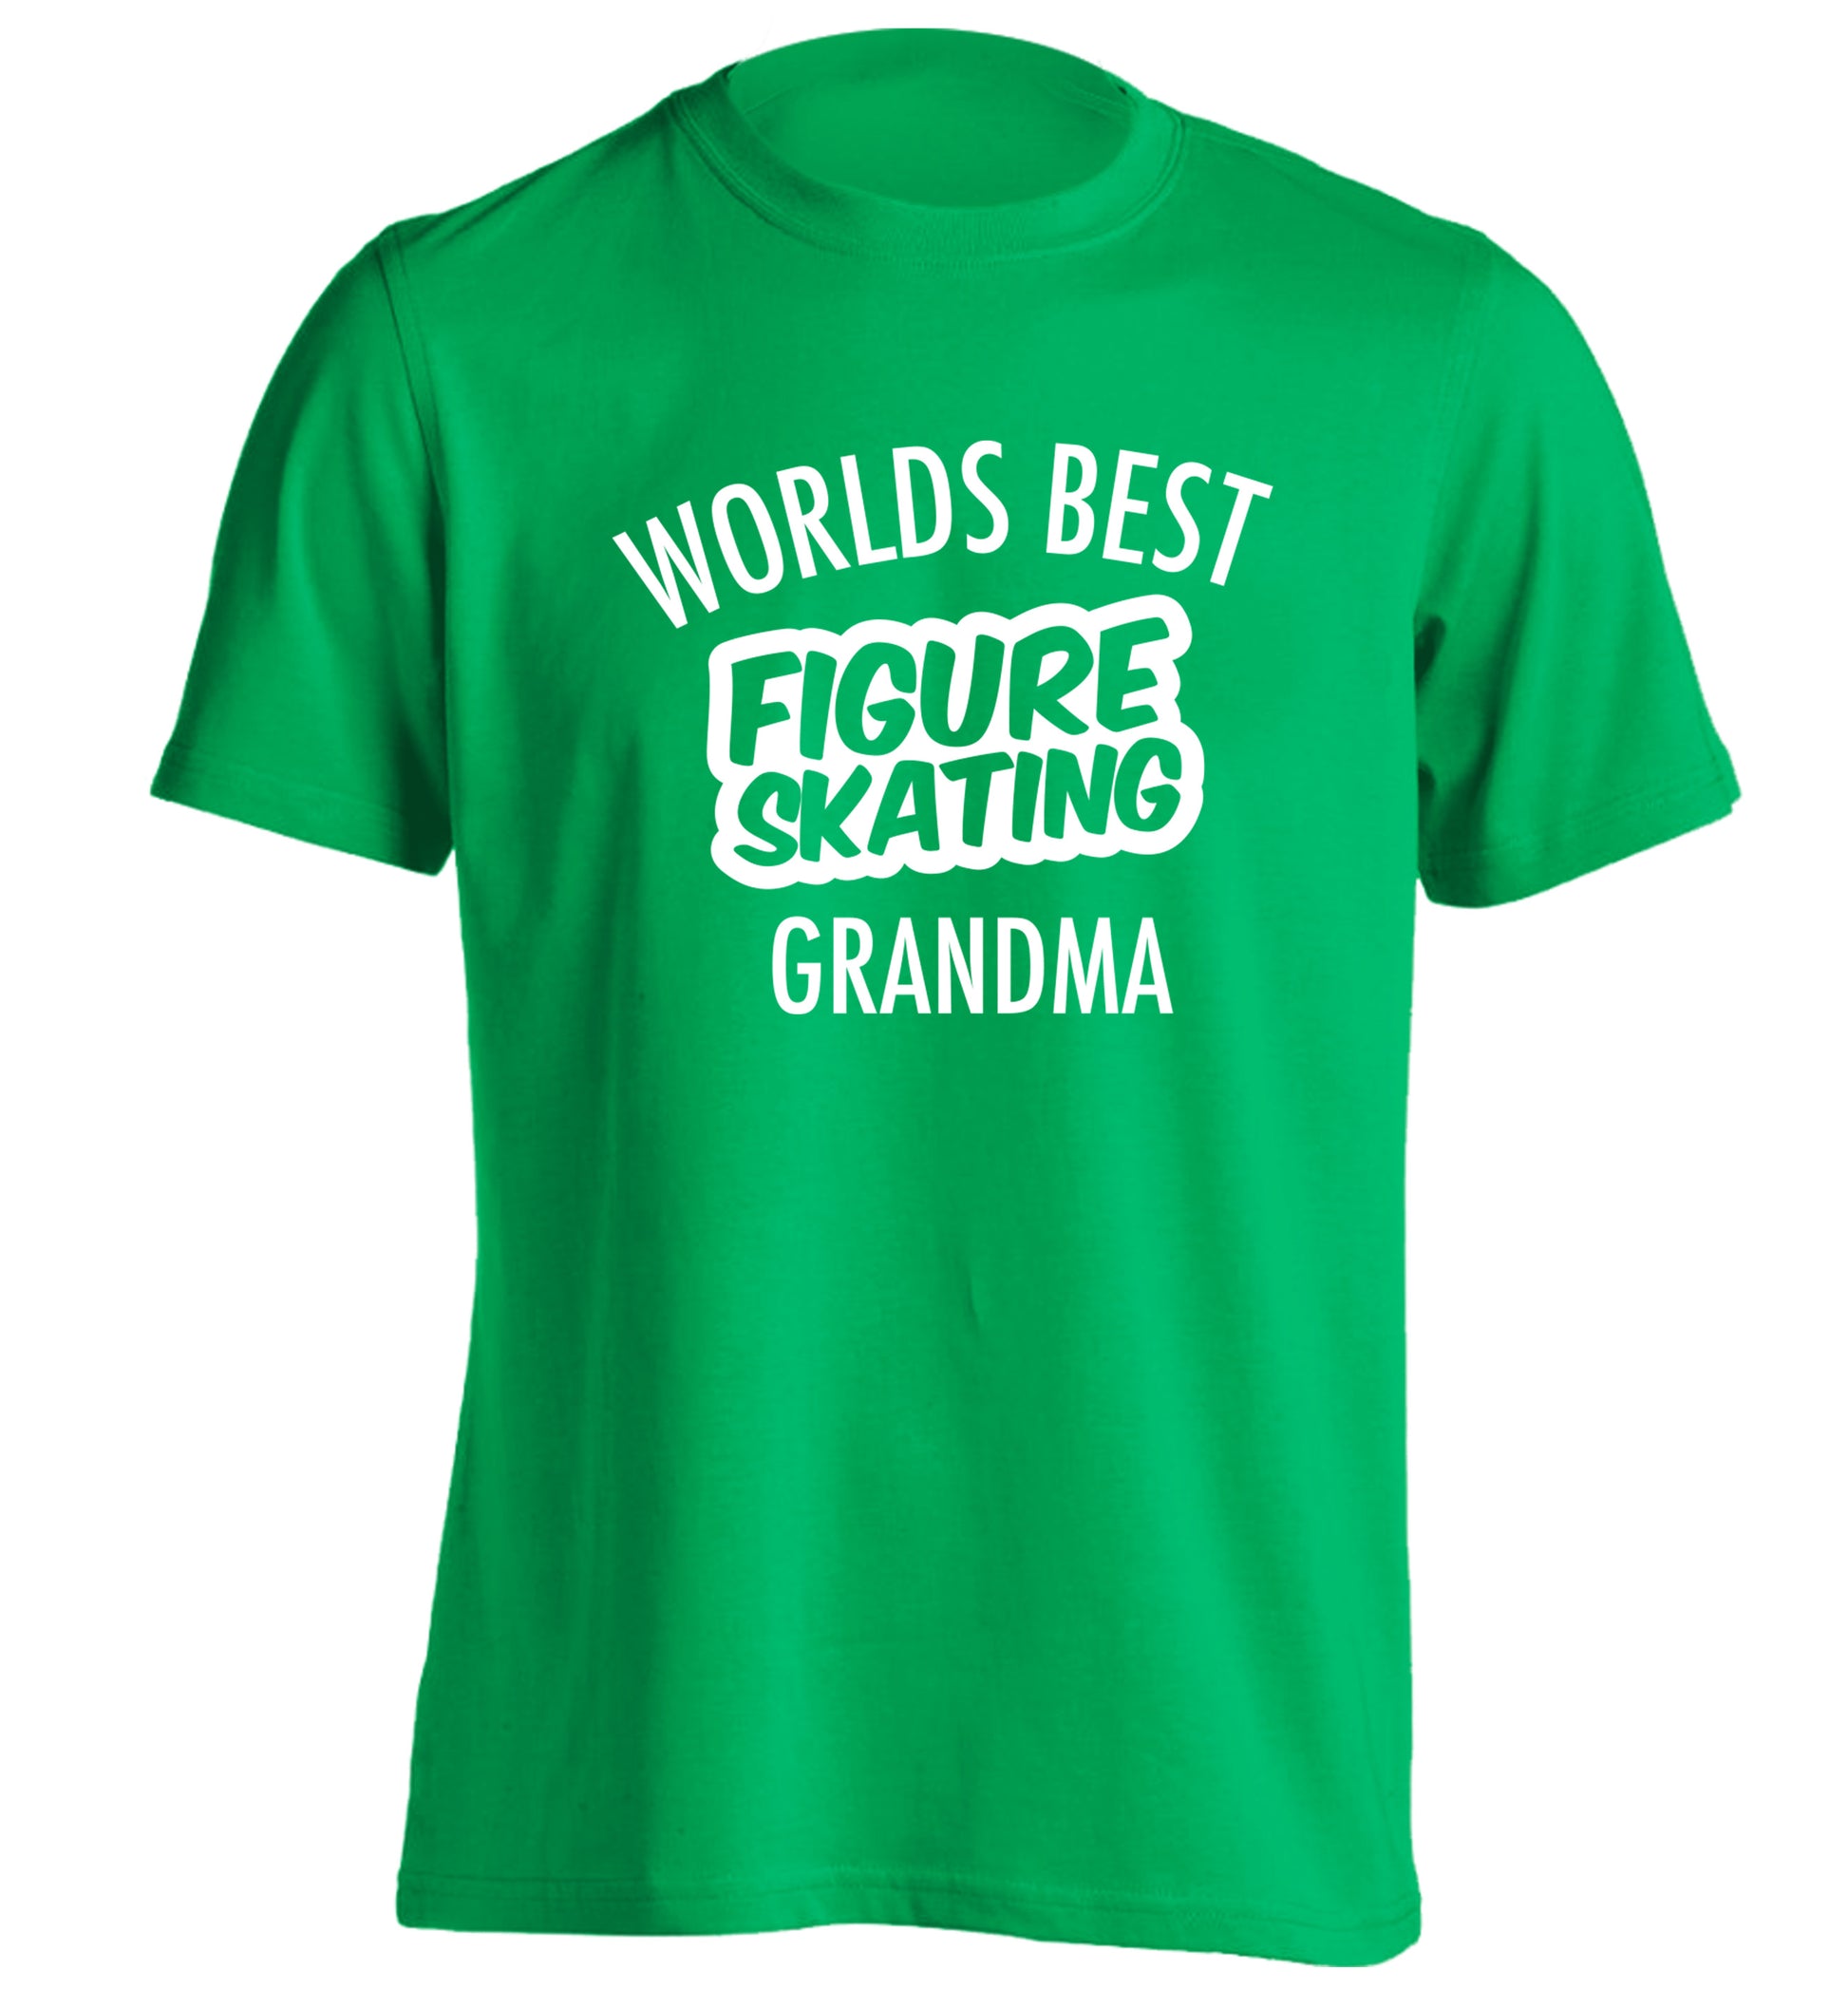 Worlds best figure skating grandma adults unisexgreen Tshirt 2XL